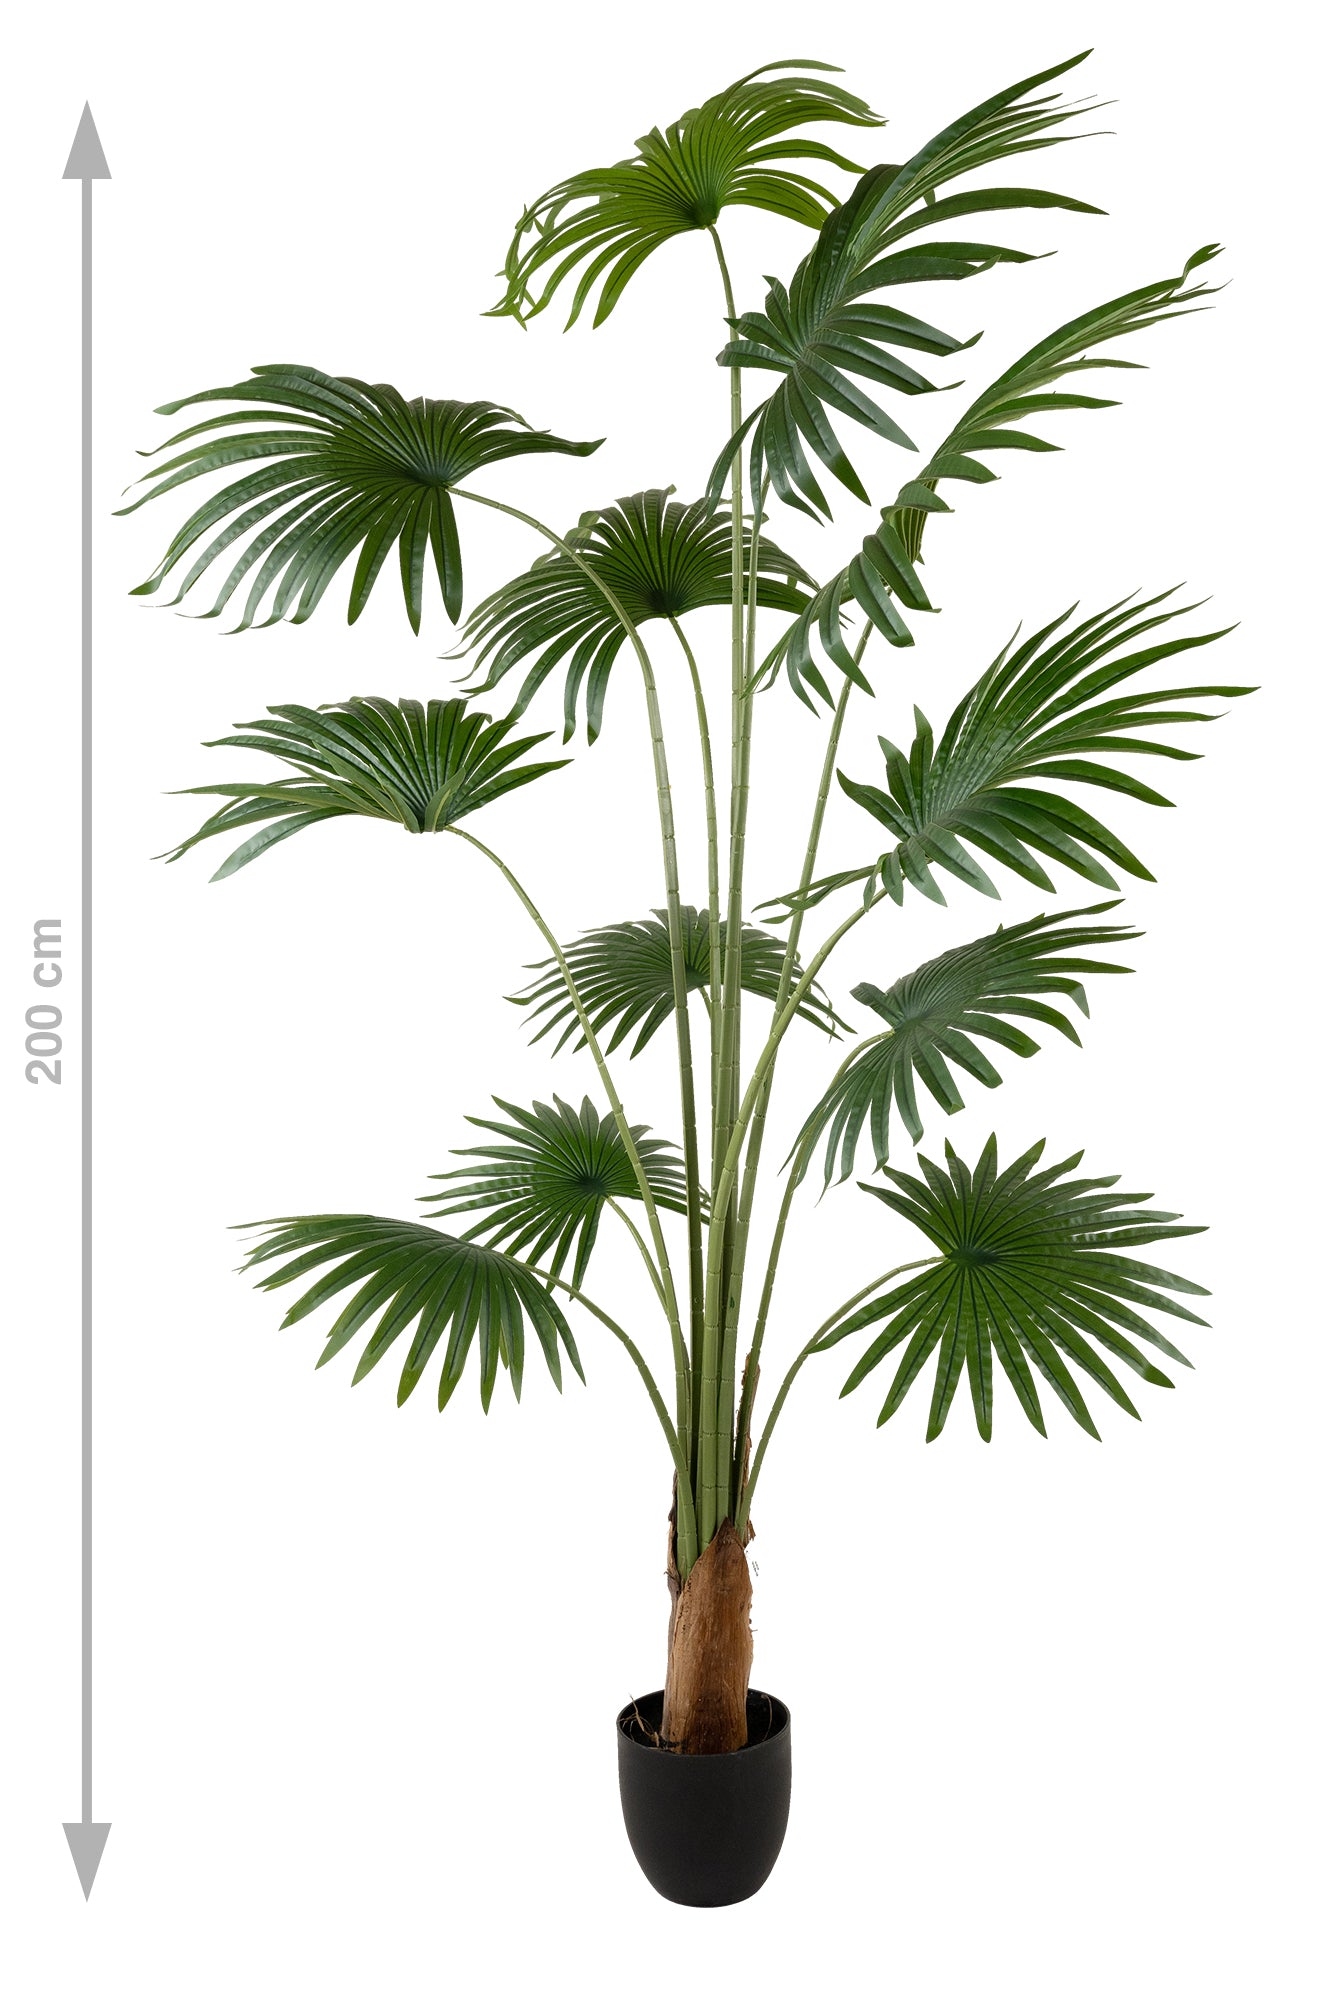 Palm artificial H200cm Washingtonia cu 12 frunze cu protectie UV